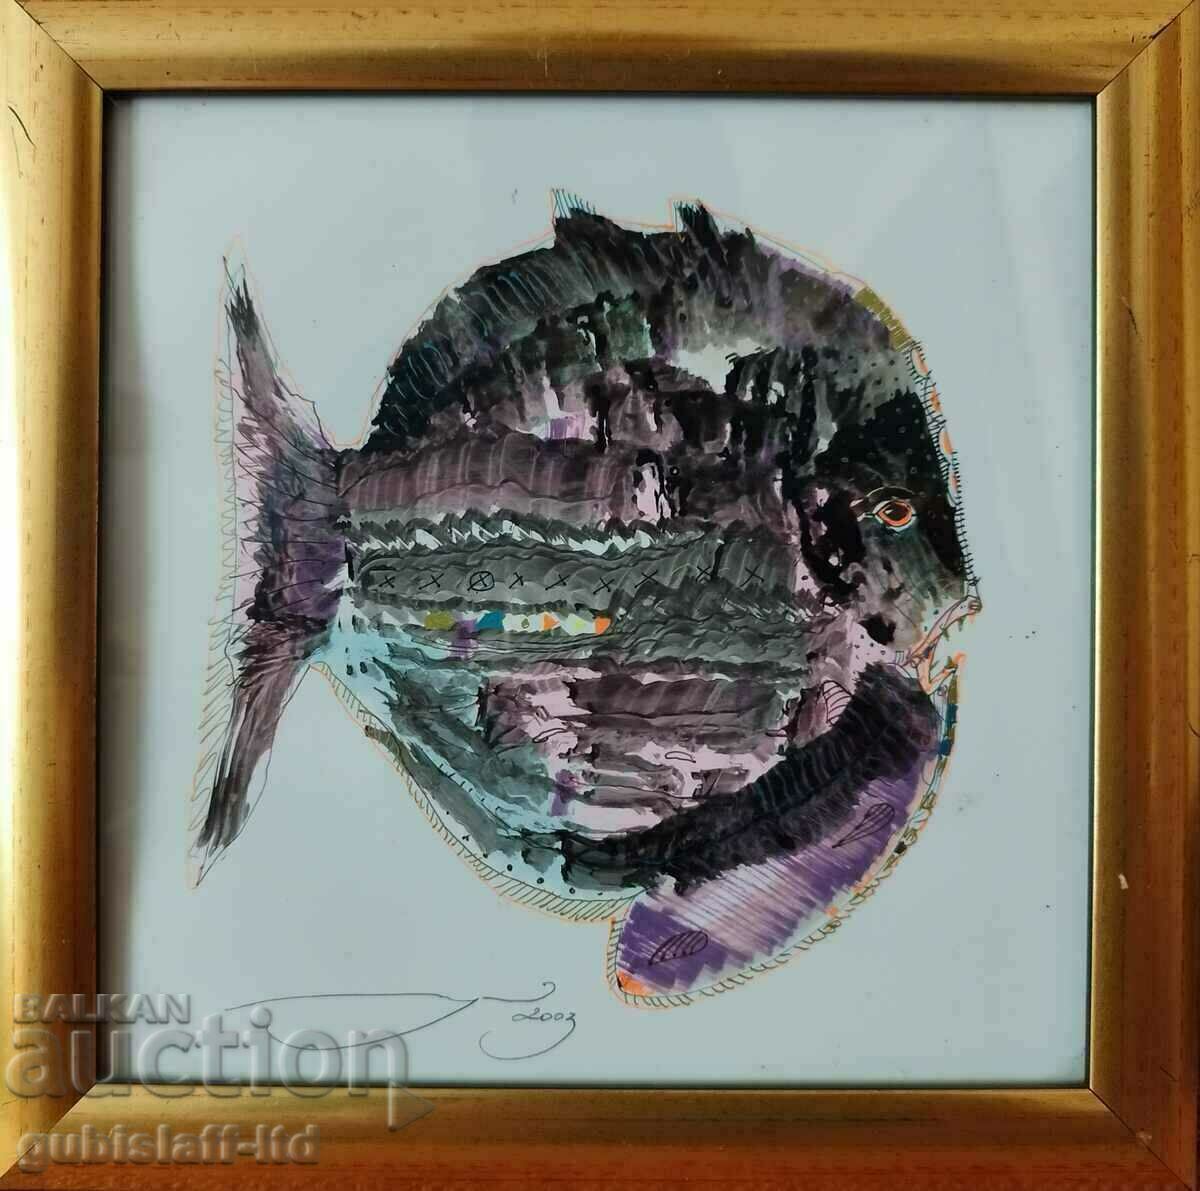 Painting "Fish art", art. Vladimir Cukic, 2003